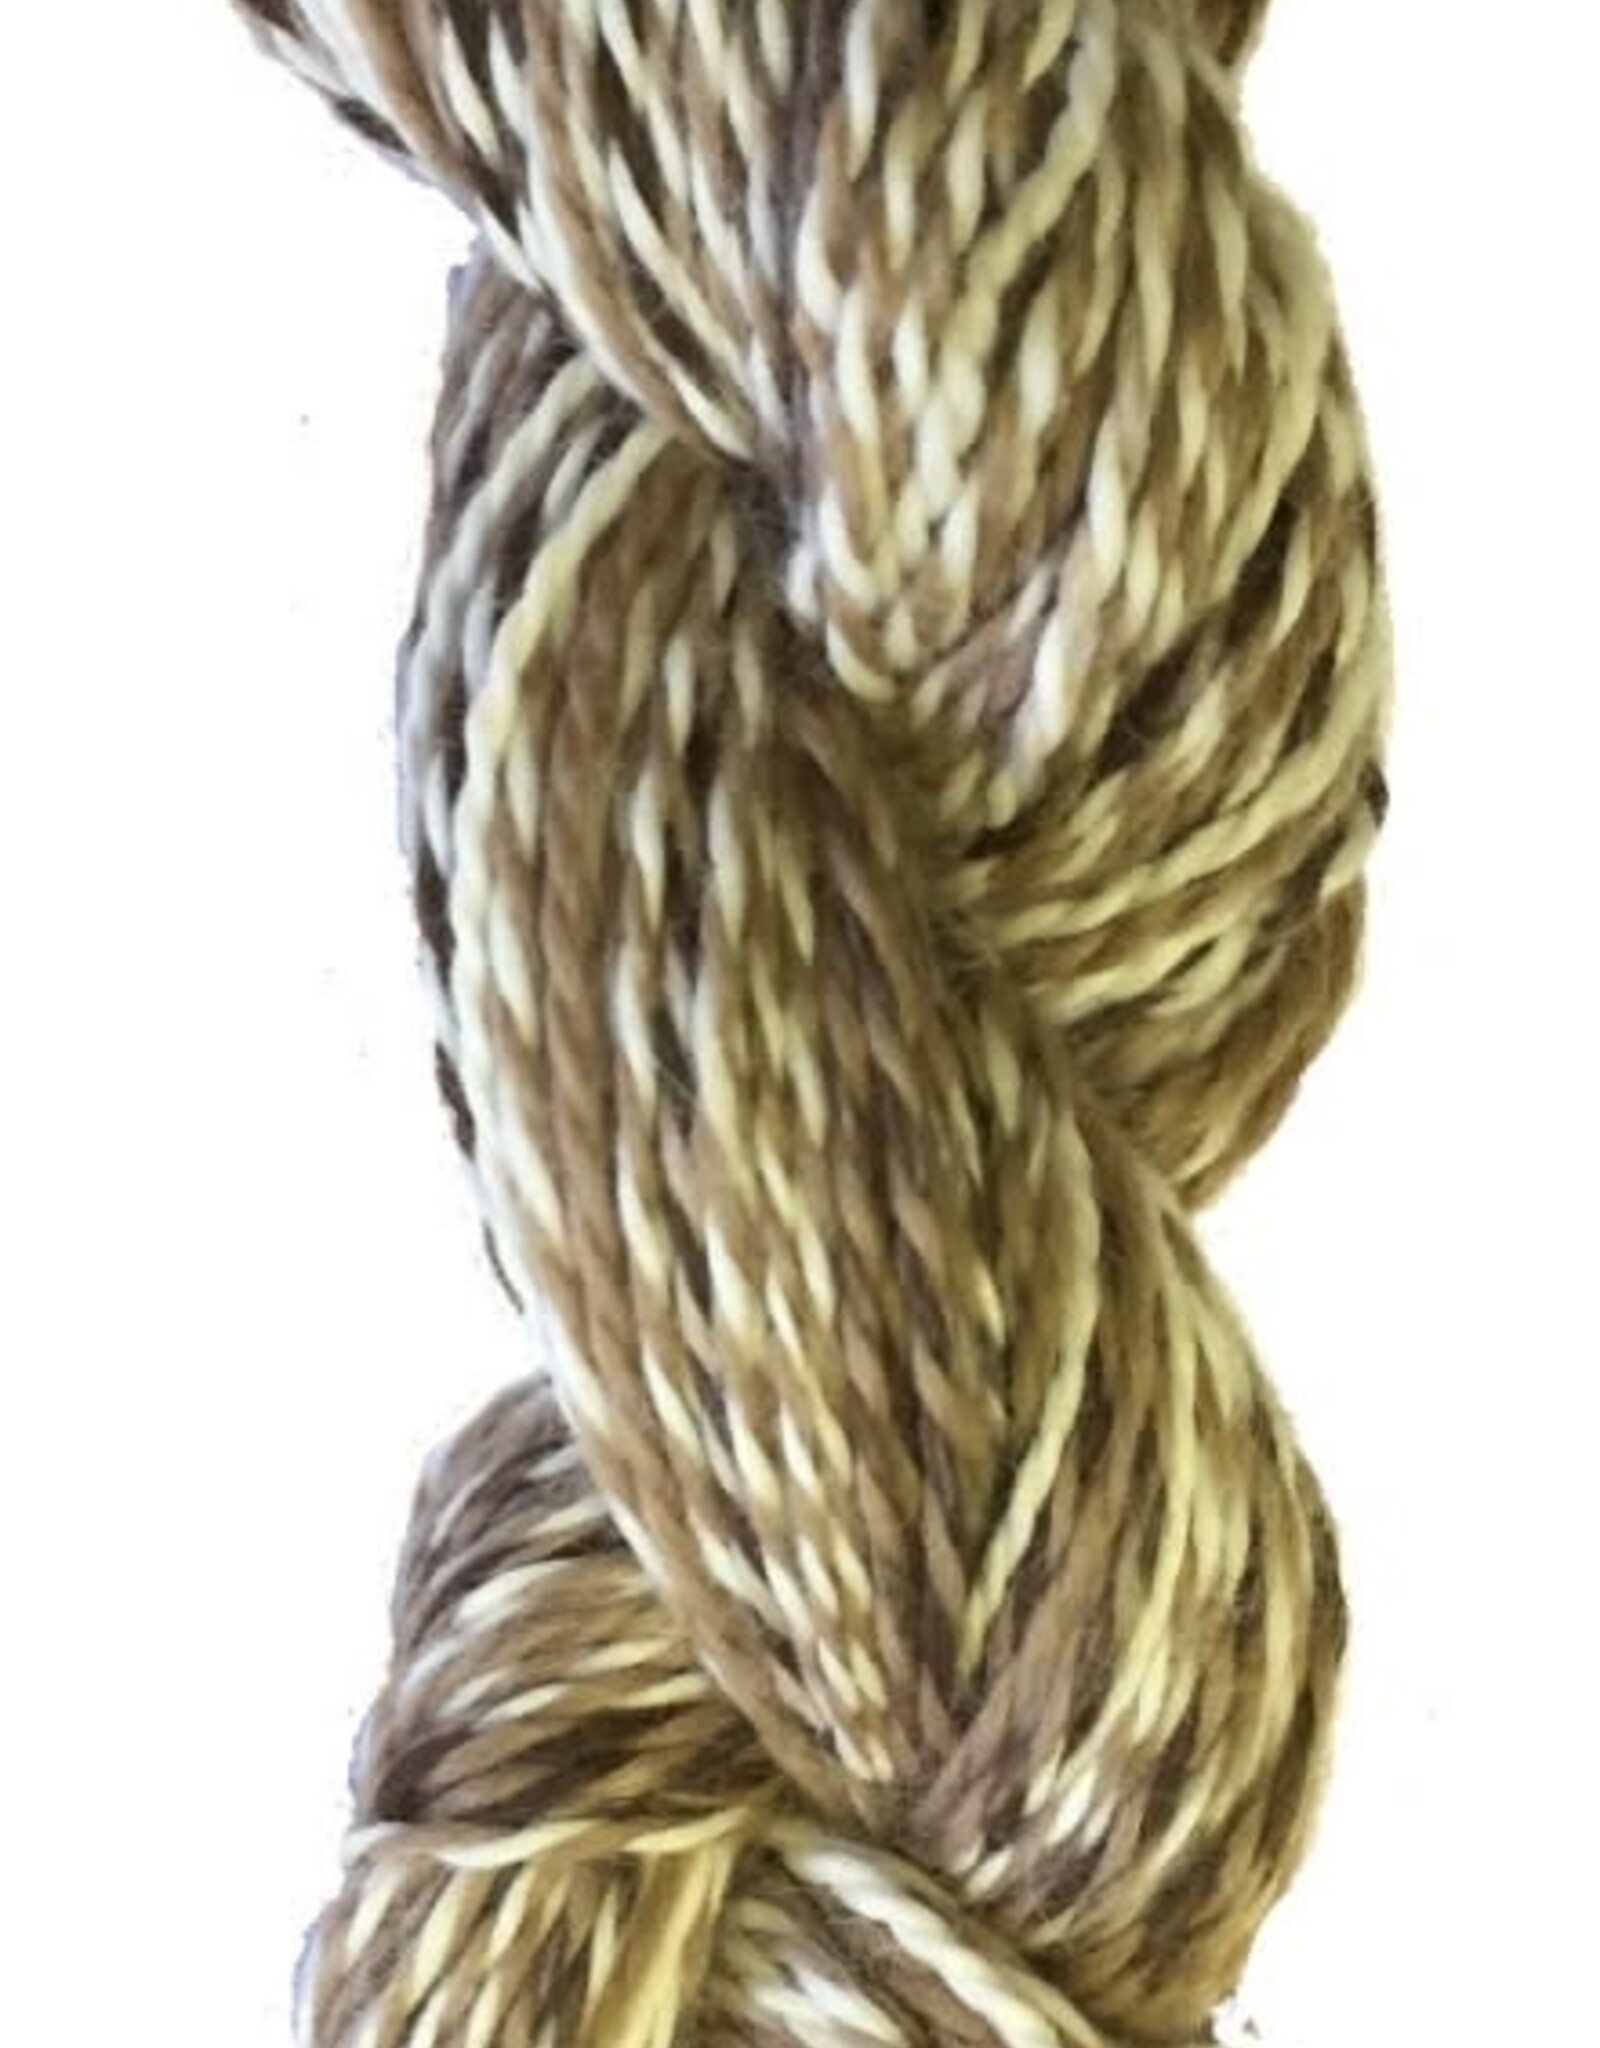 Alpaca Yarn Company Espiral arequipa browns